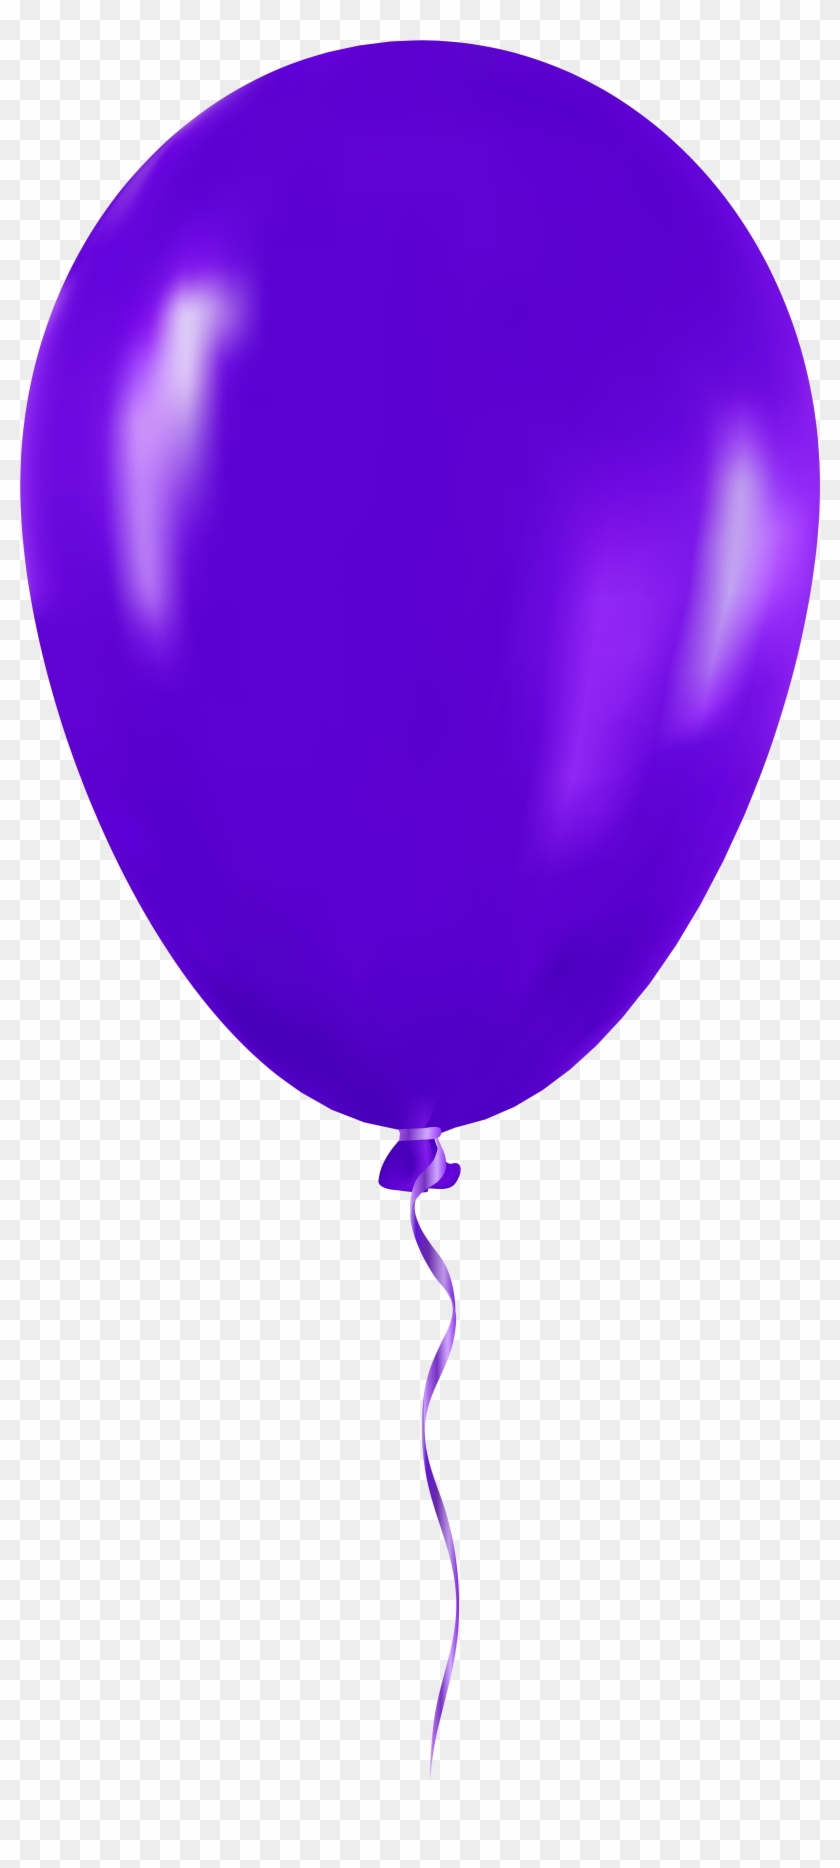 Balloon Clipart Oval - Purple Balloon Transparent Background #275853